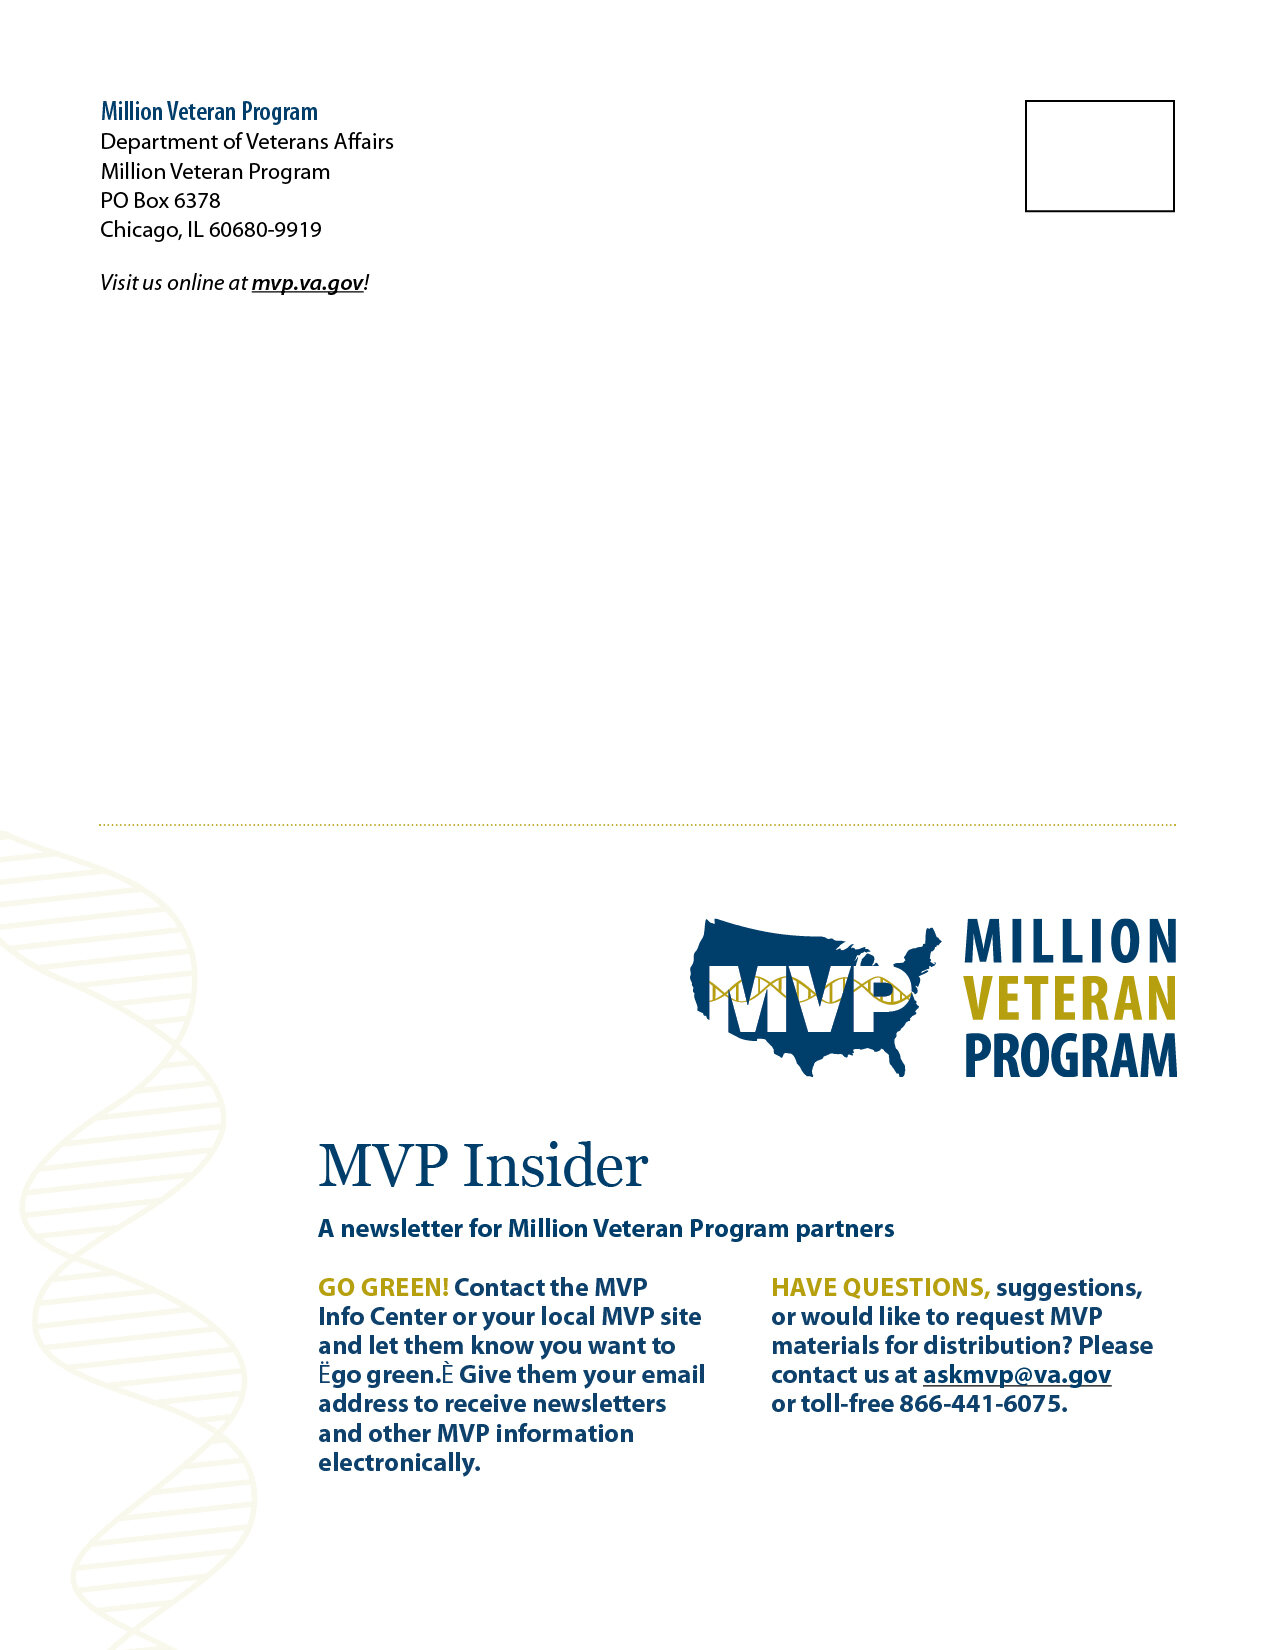 MVP Insider Redesign_FINAL.spreads5.jpg